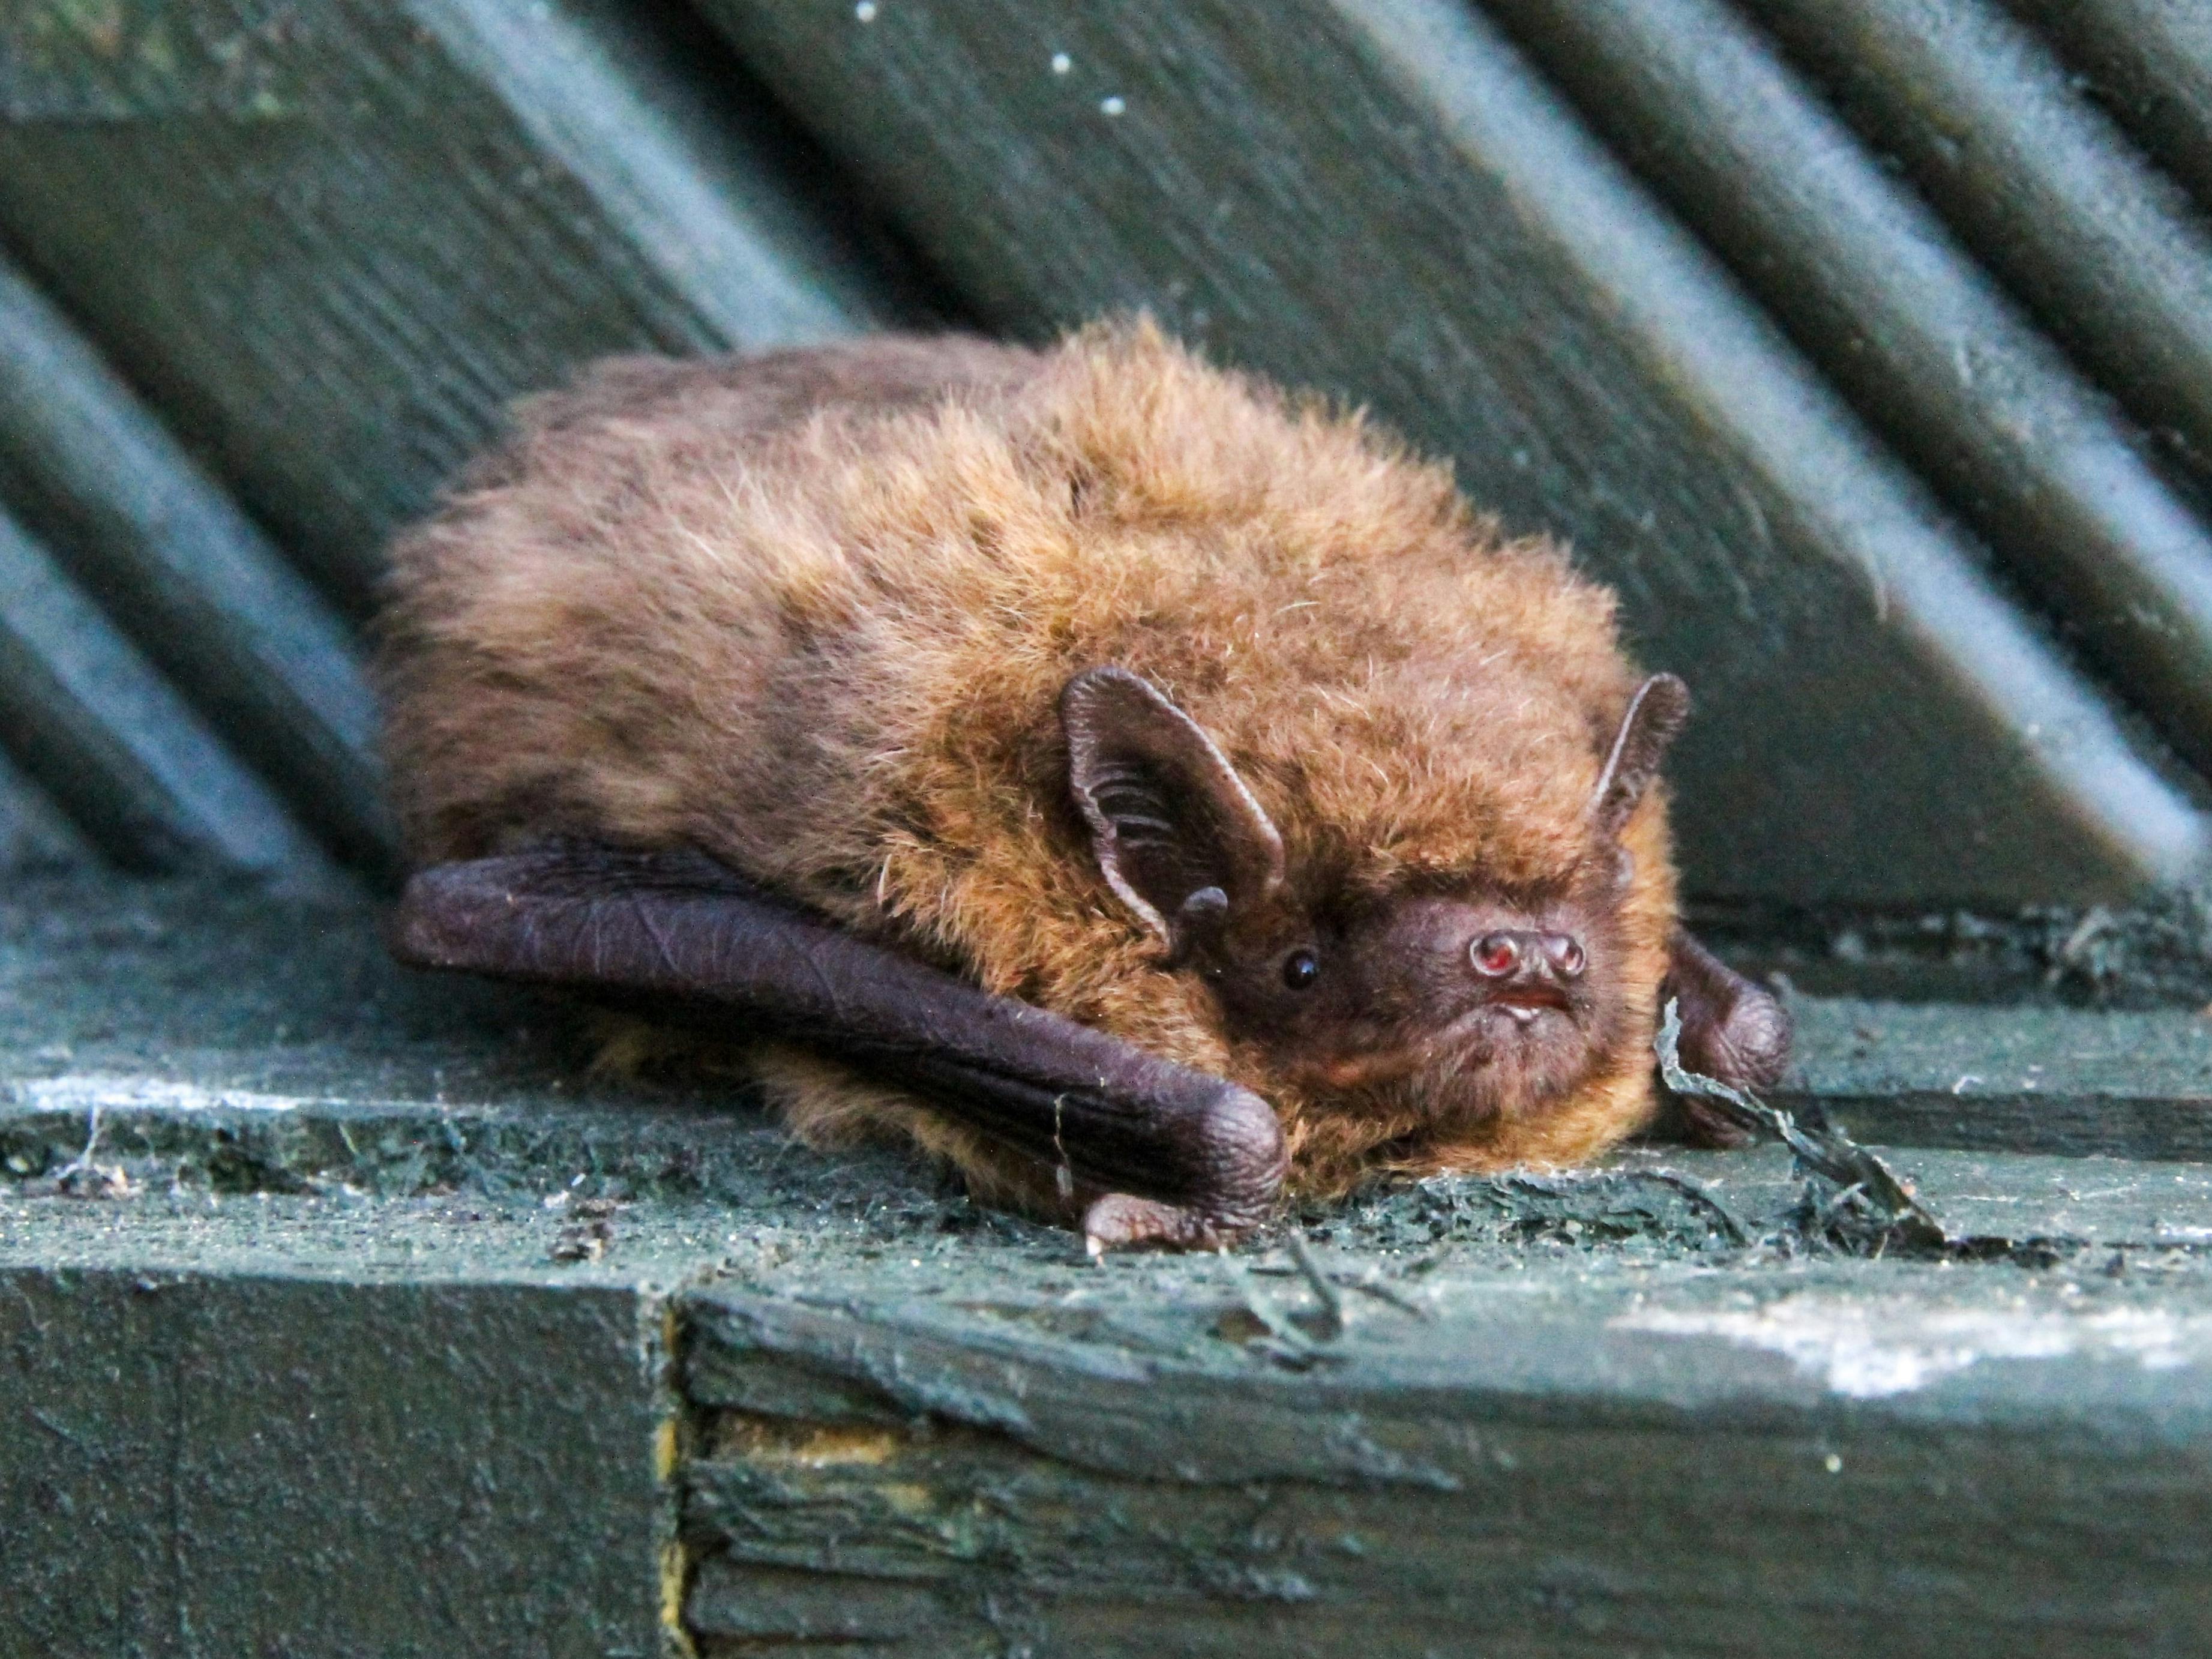 A bat sat on a wooden roof